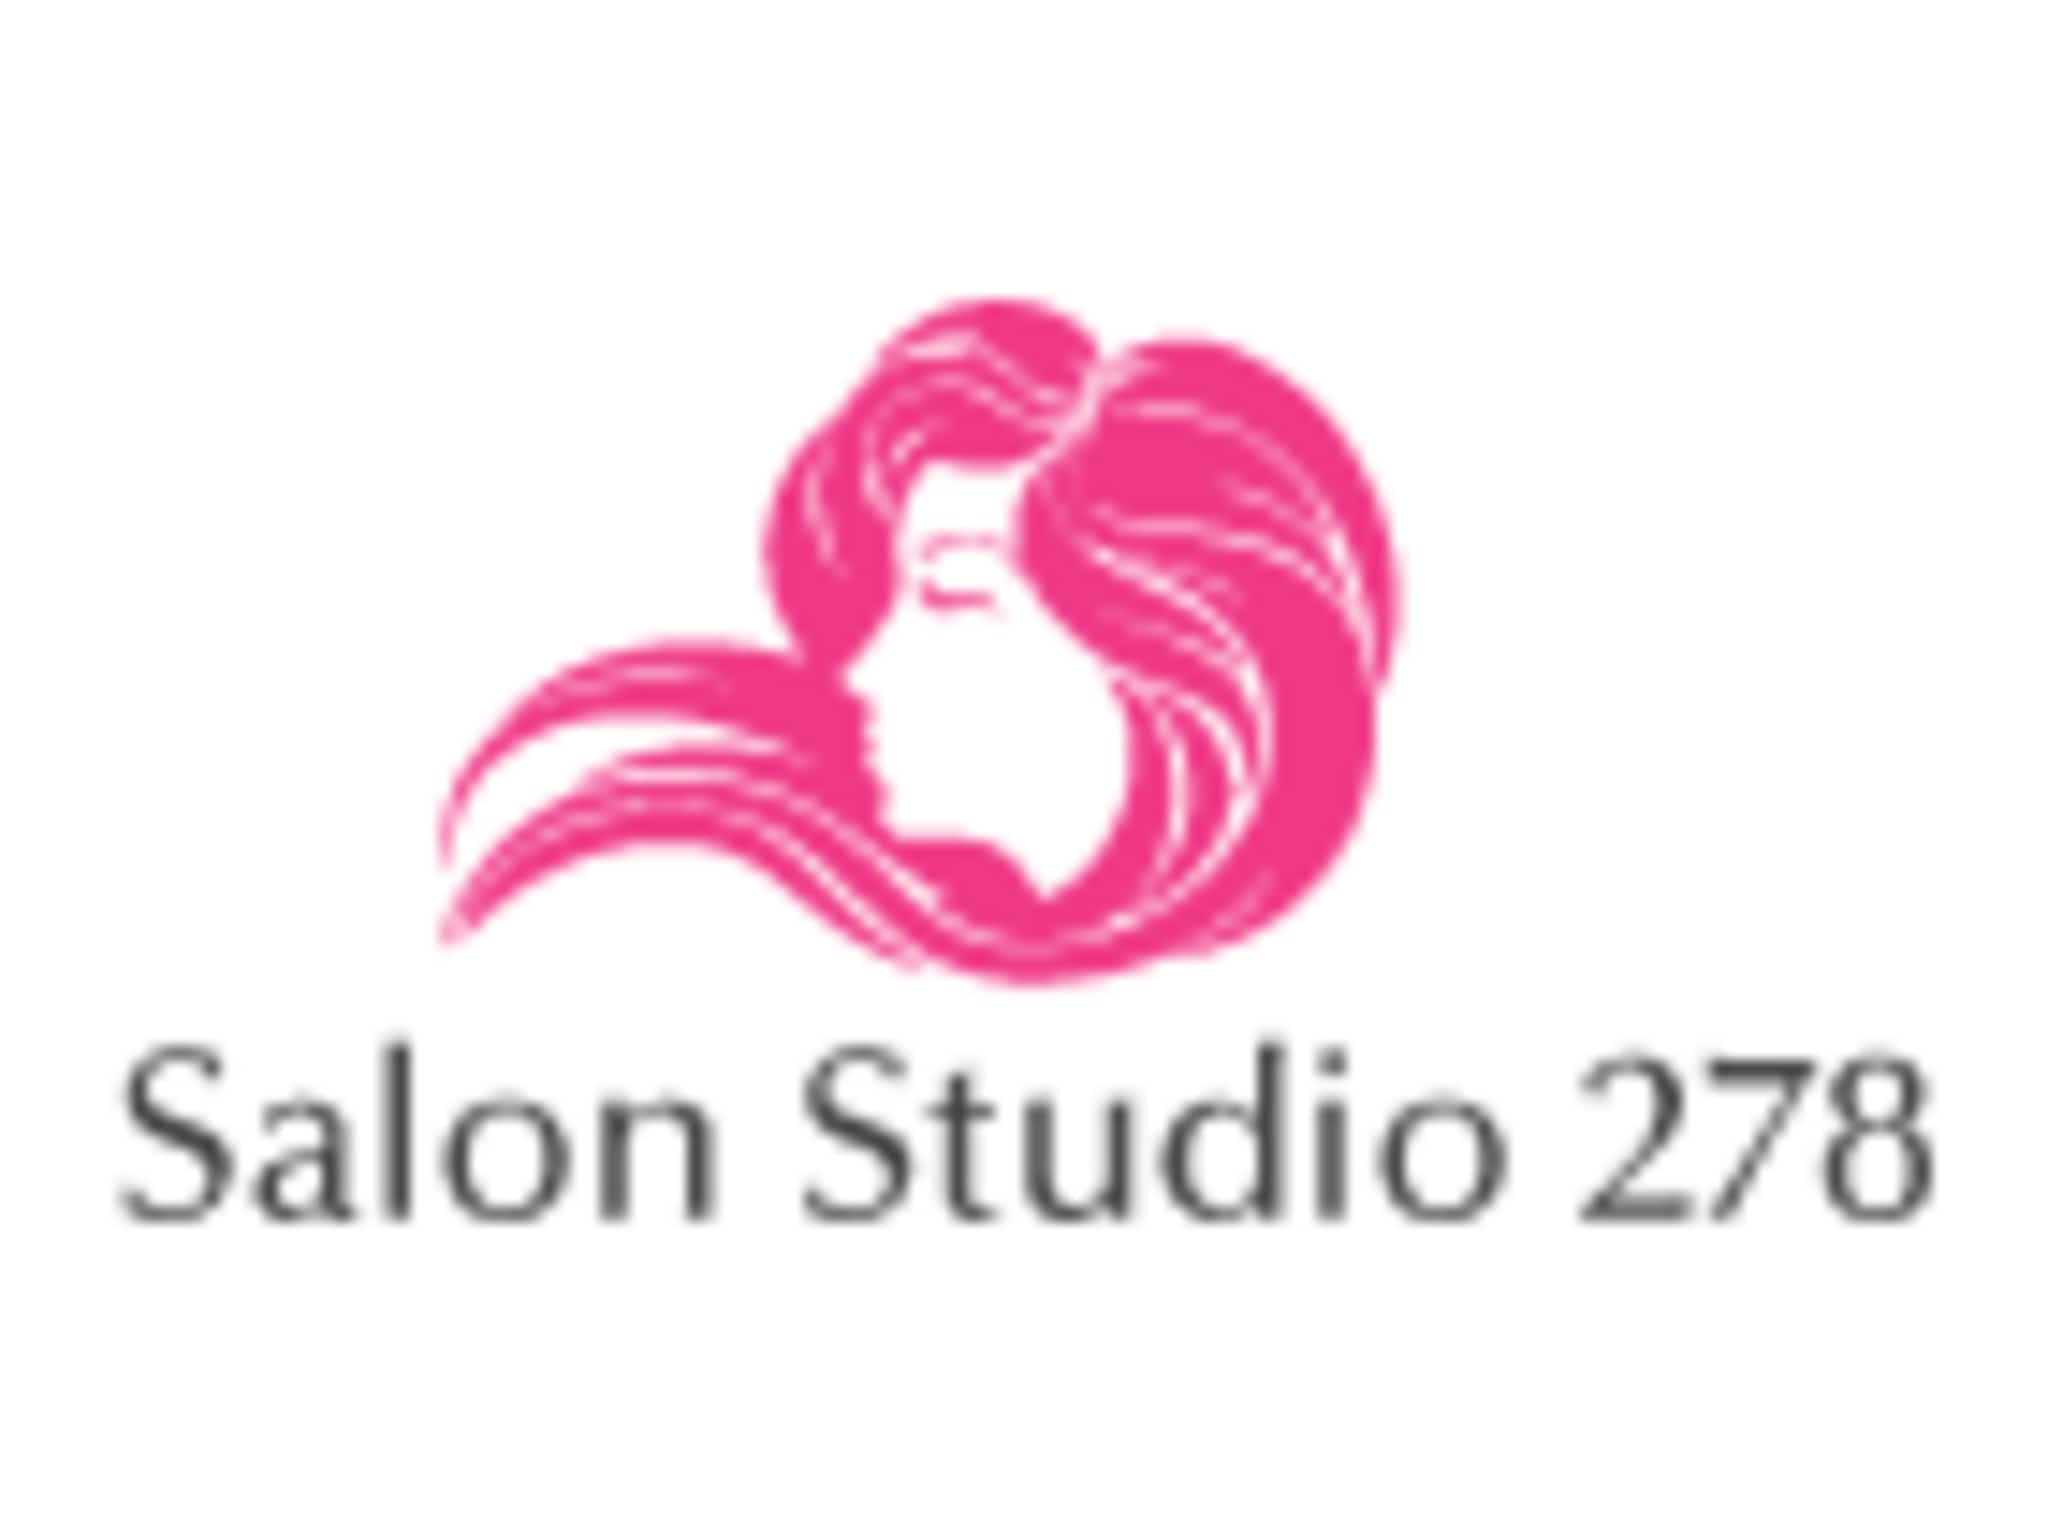 photo Salon Studio 278